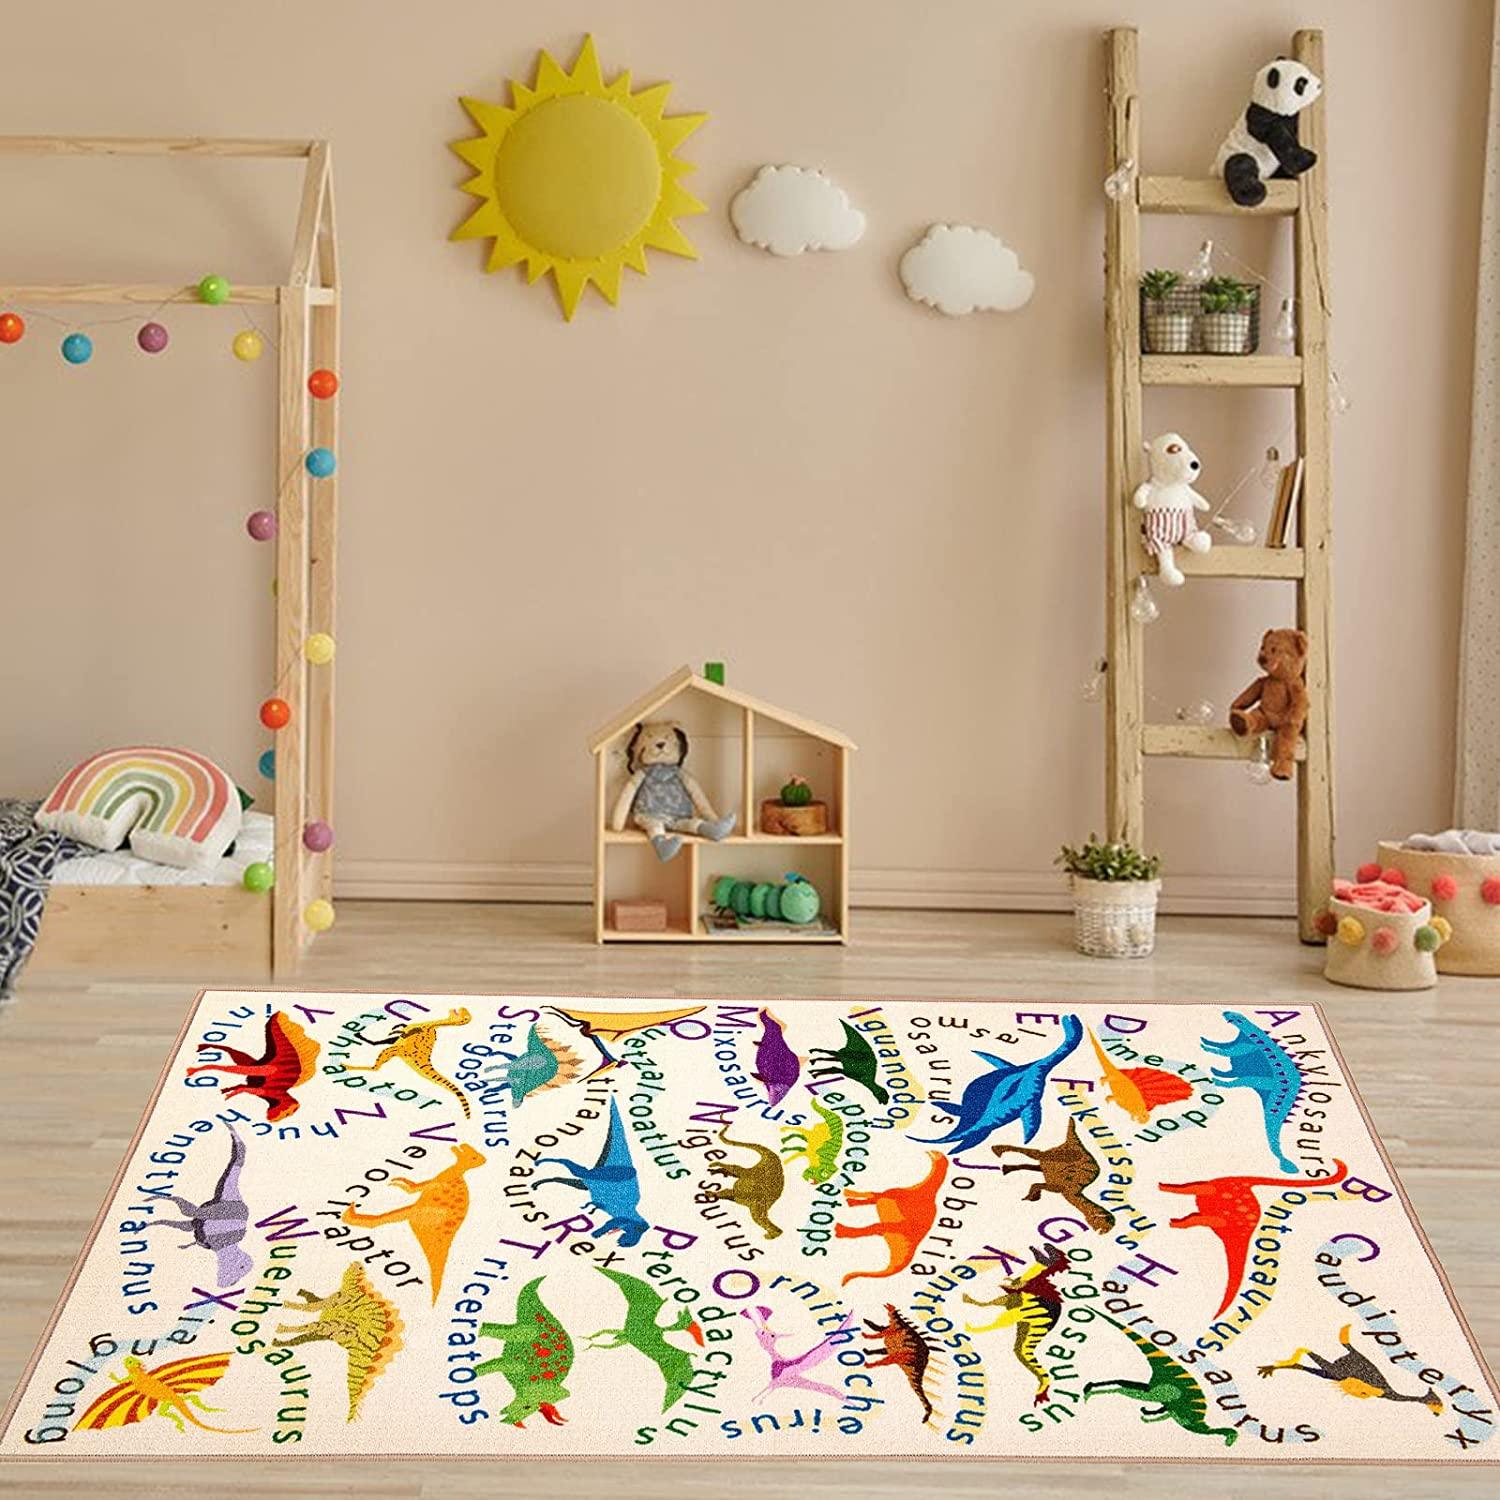 59”x39“ Kids Alphabet Dinosaur Rug for Playroom Classroom - BooooomJackson